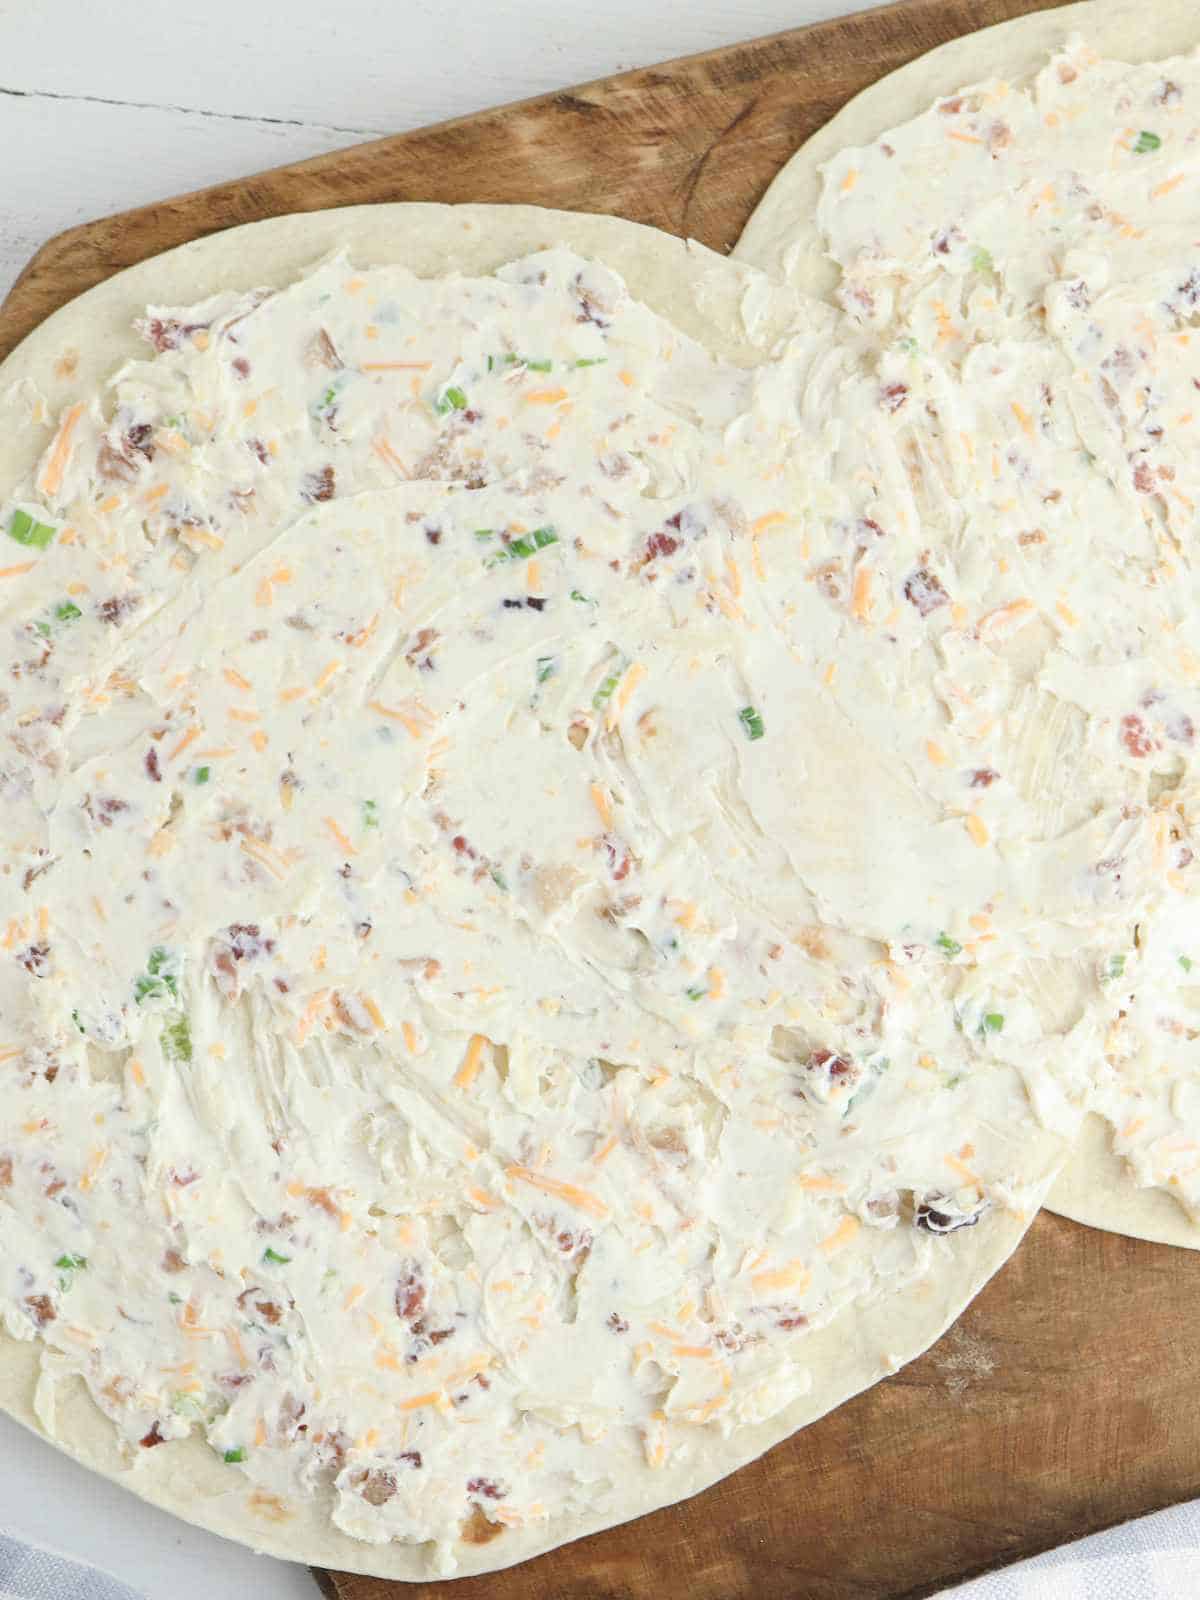 flour tortillas spread with cream cheese mixture.